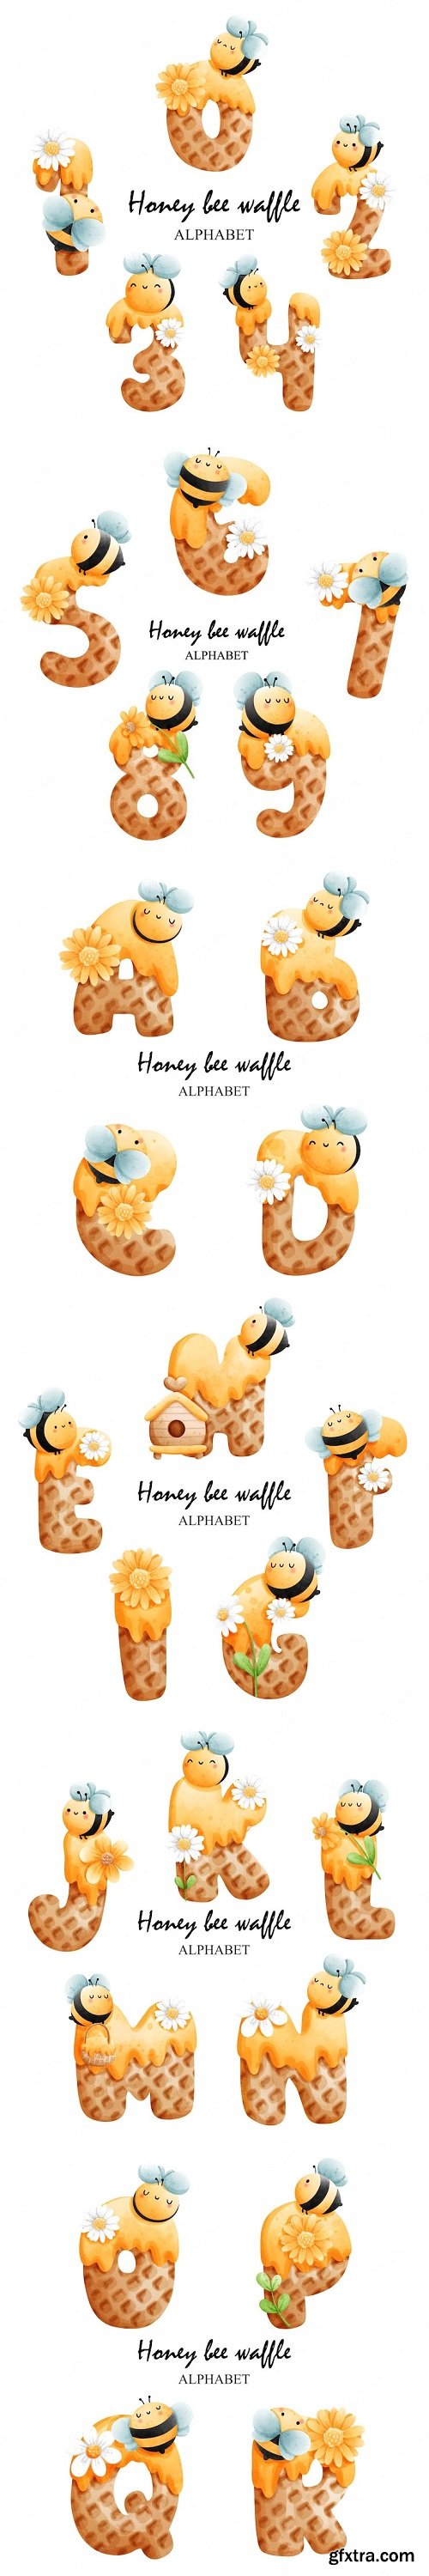 Honey bee waffle alphabetbee font vector illustration